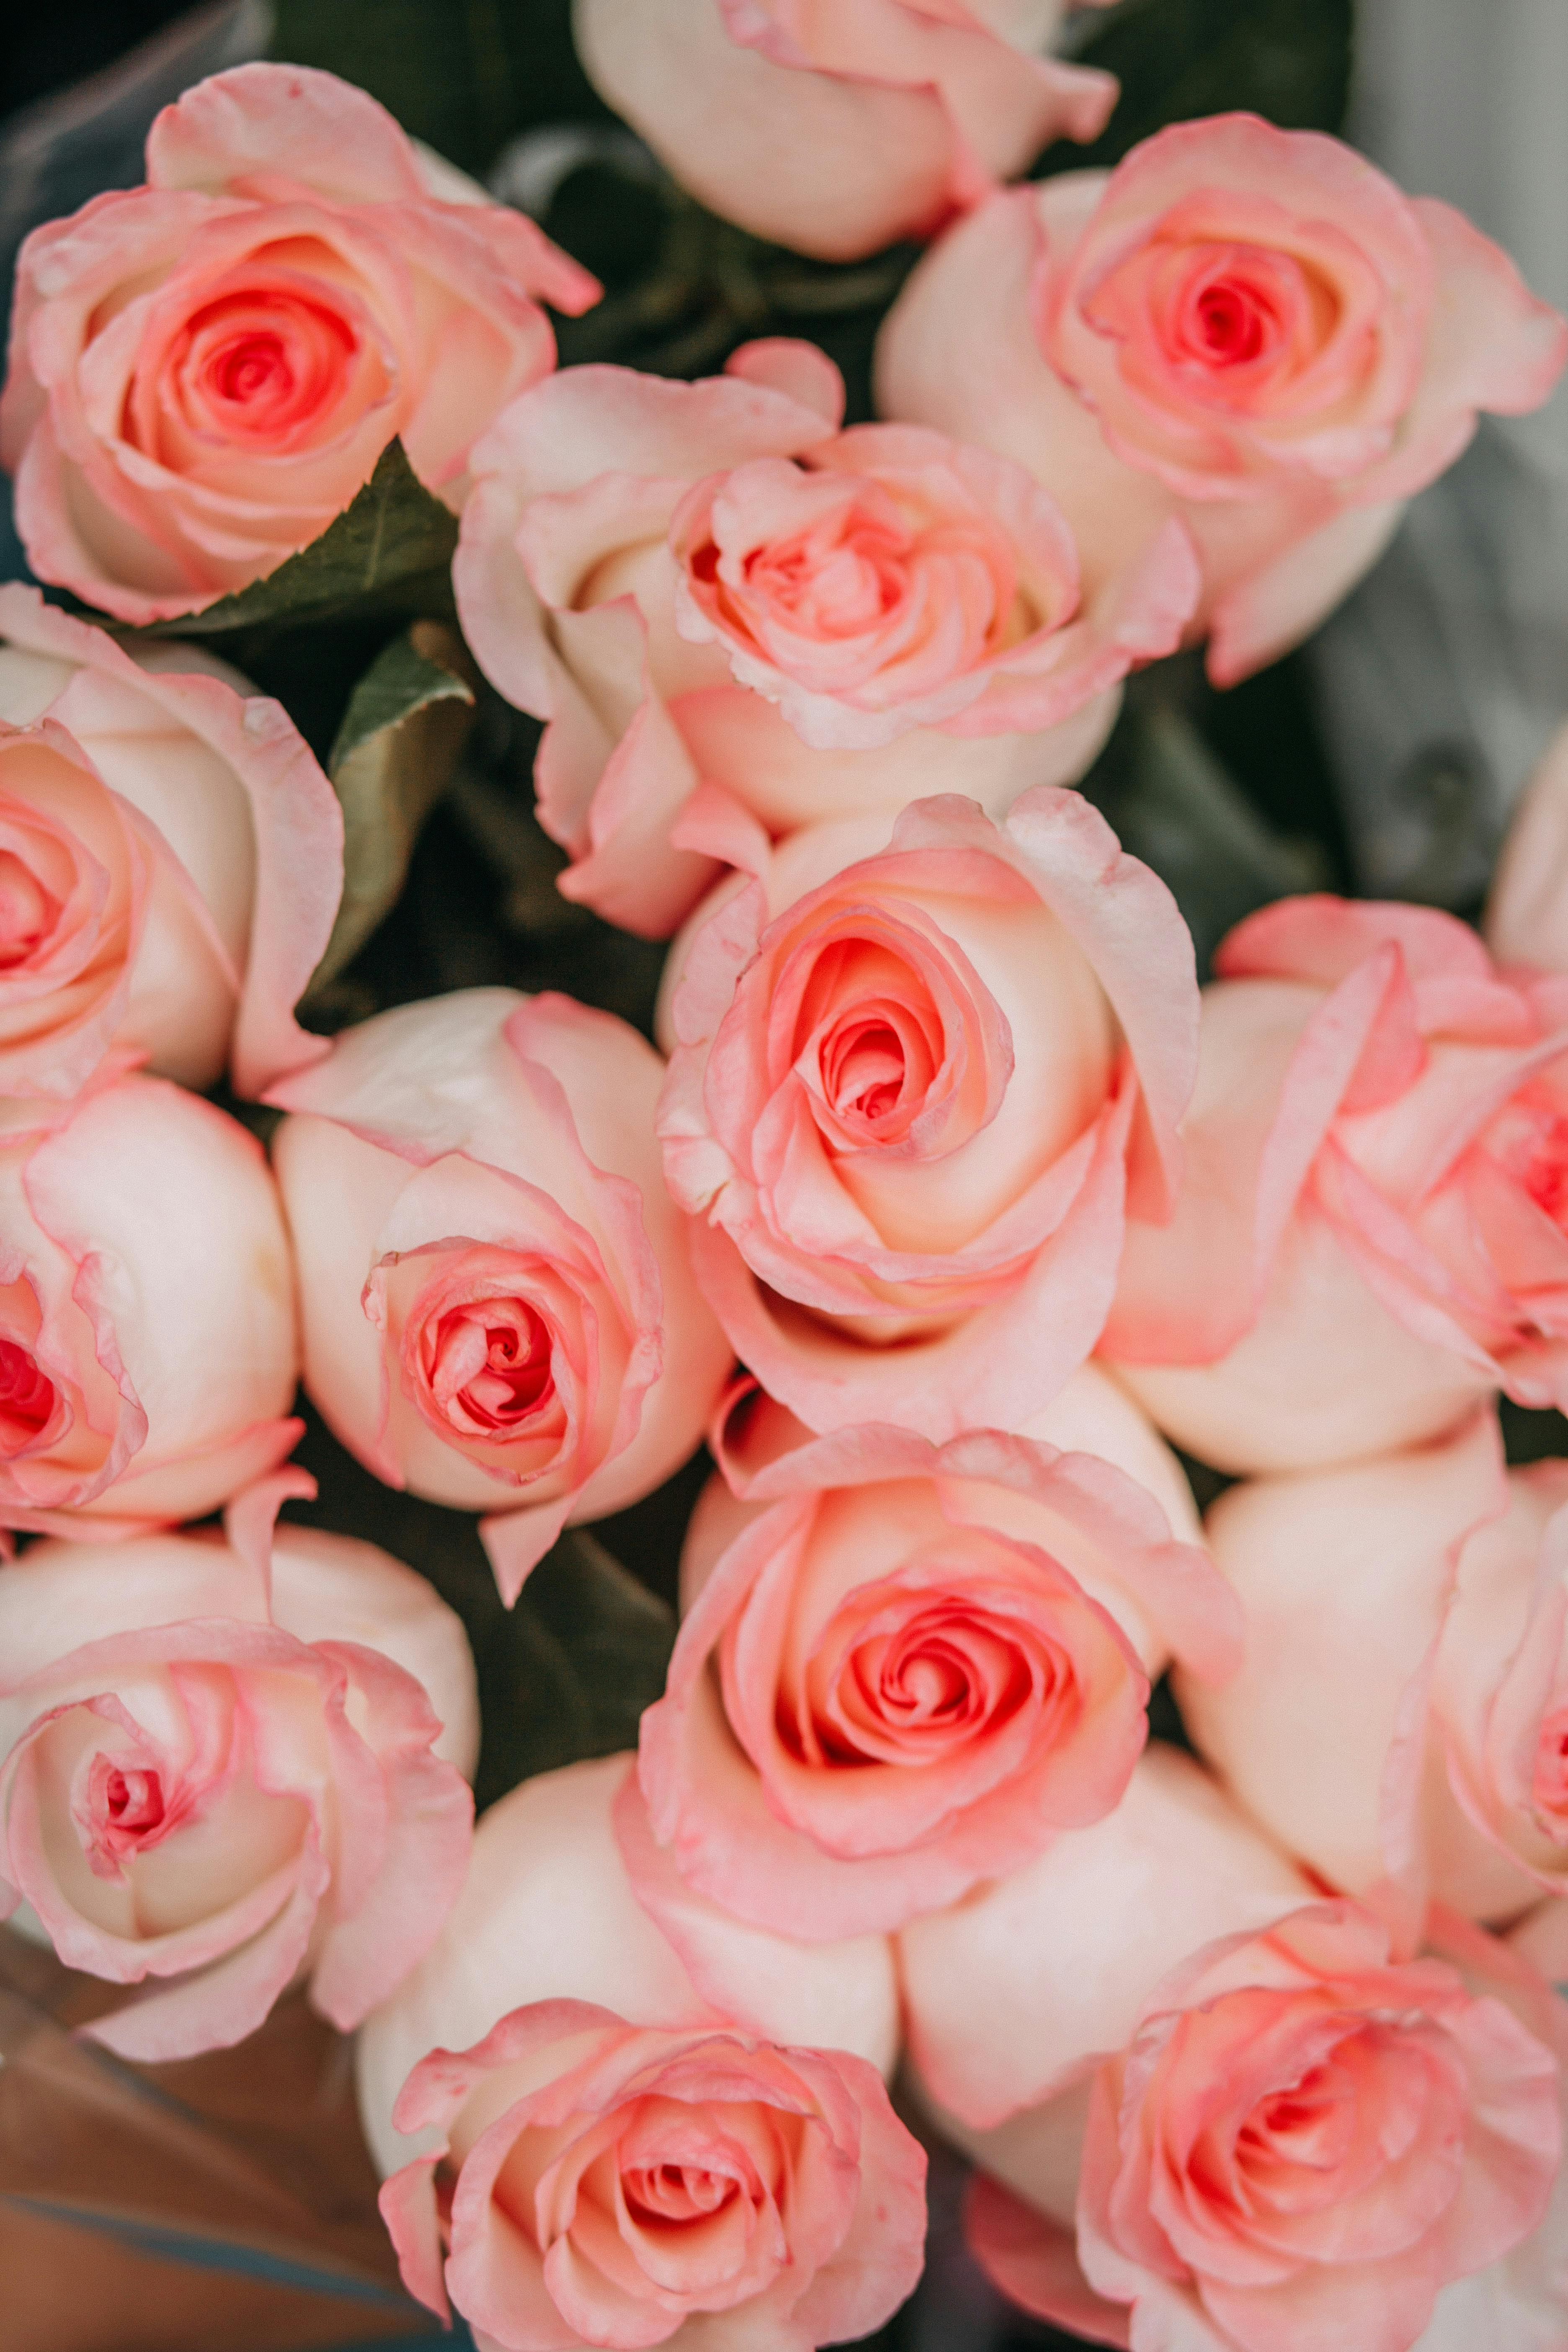 90,000+ Best Rose Wallpaper Photos · 100% Free Download · Pexels